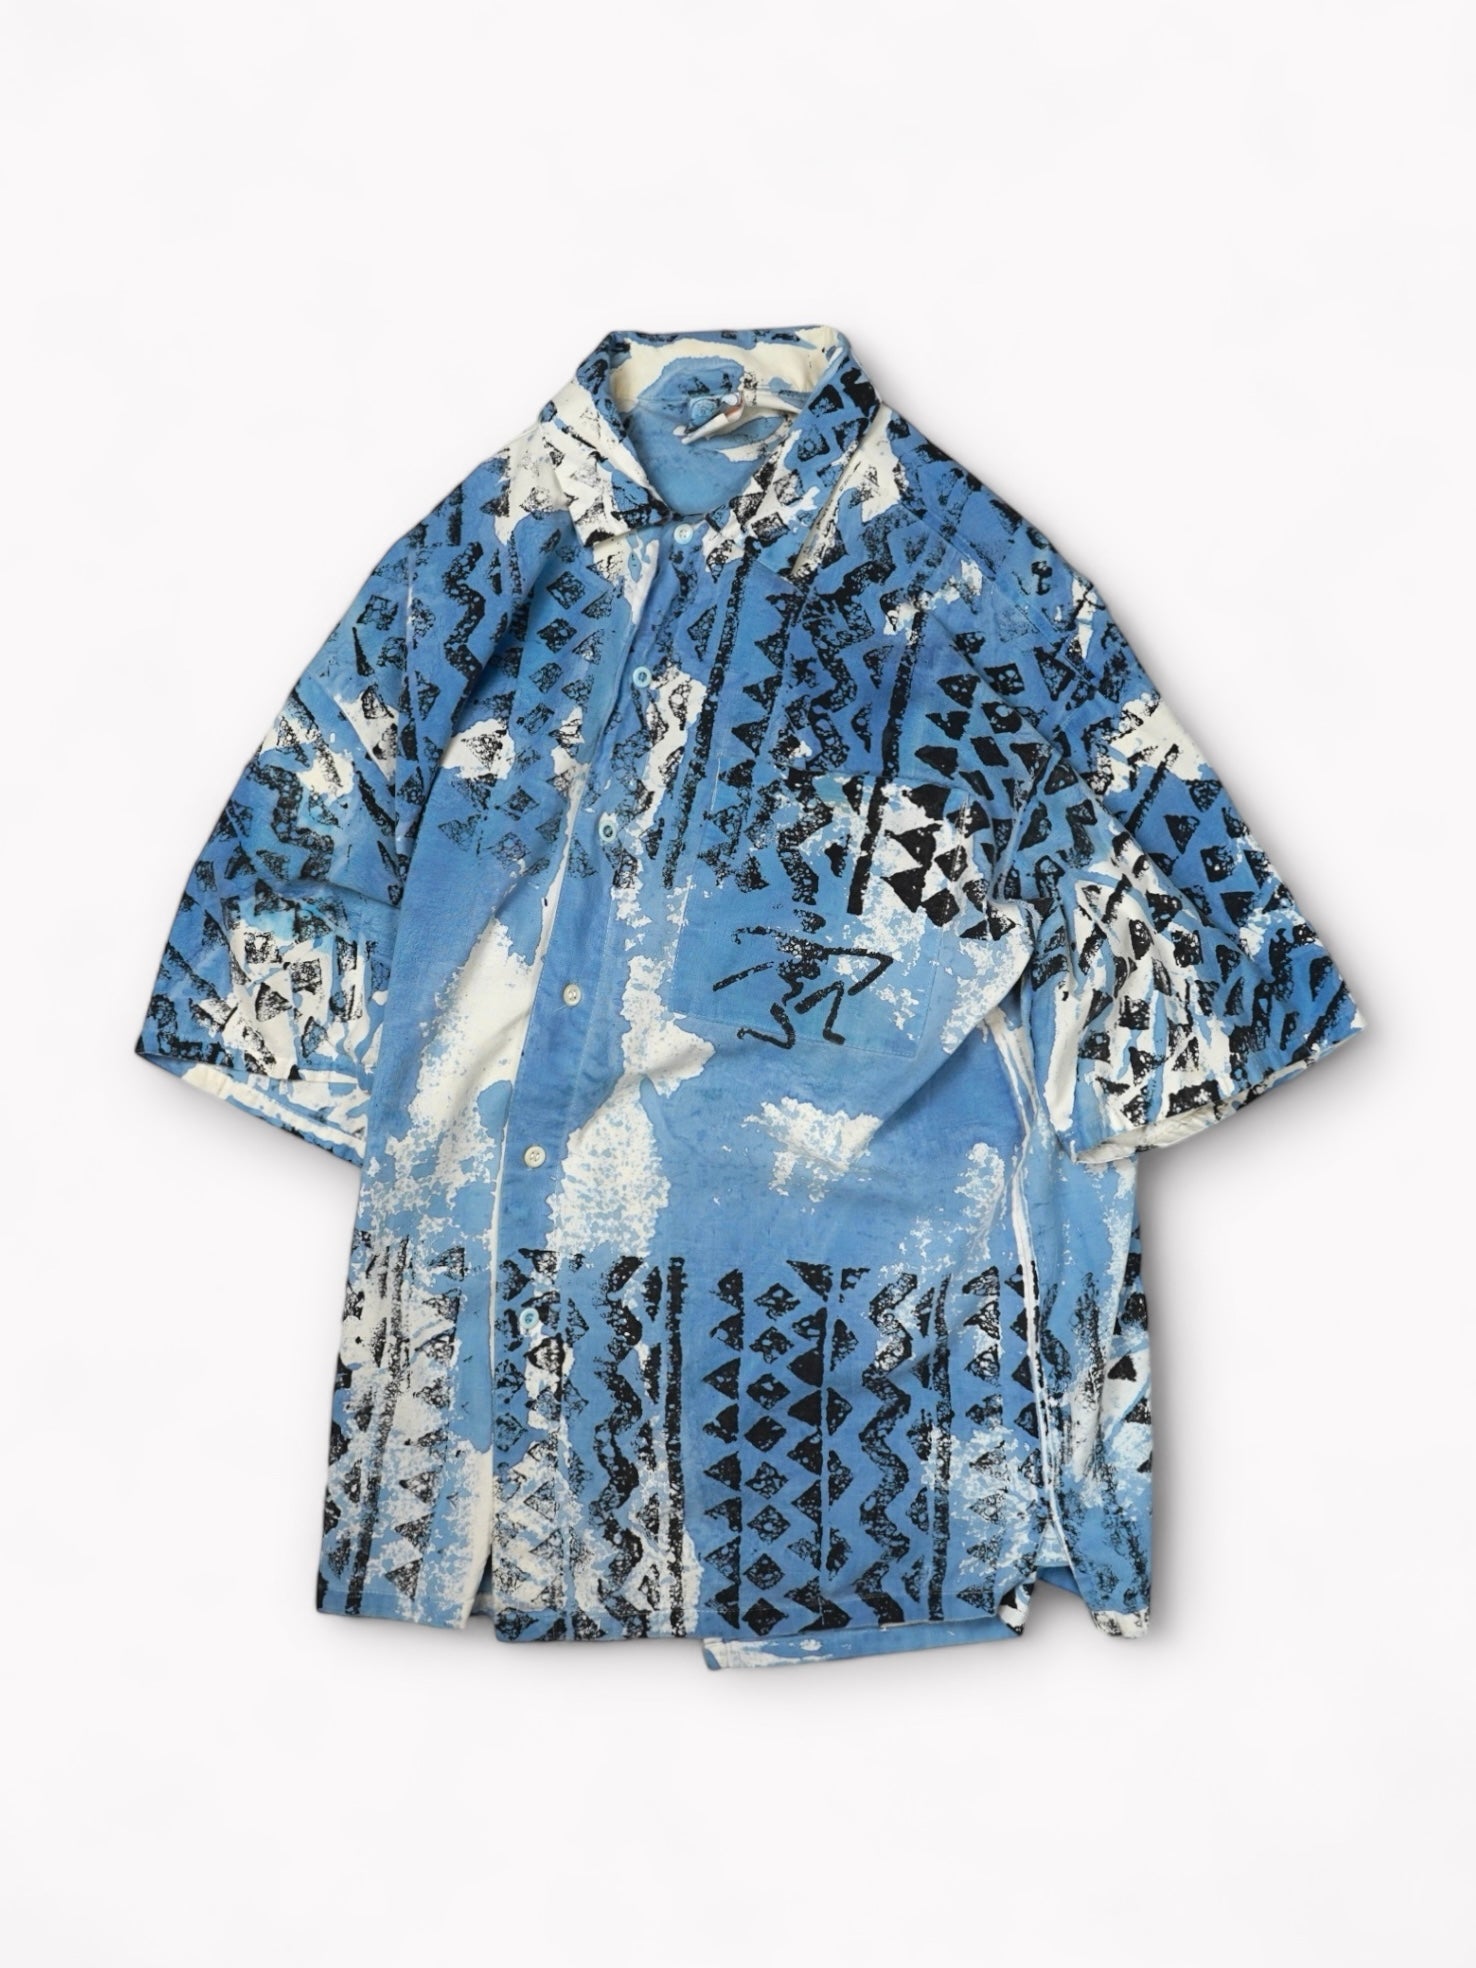 90's Ocean Pacific Cotton all over print shirt made in USA【XL】オーシャンパシフィック コットン半袖シャツ